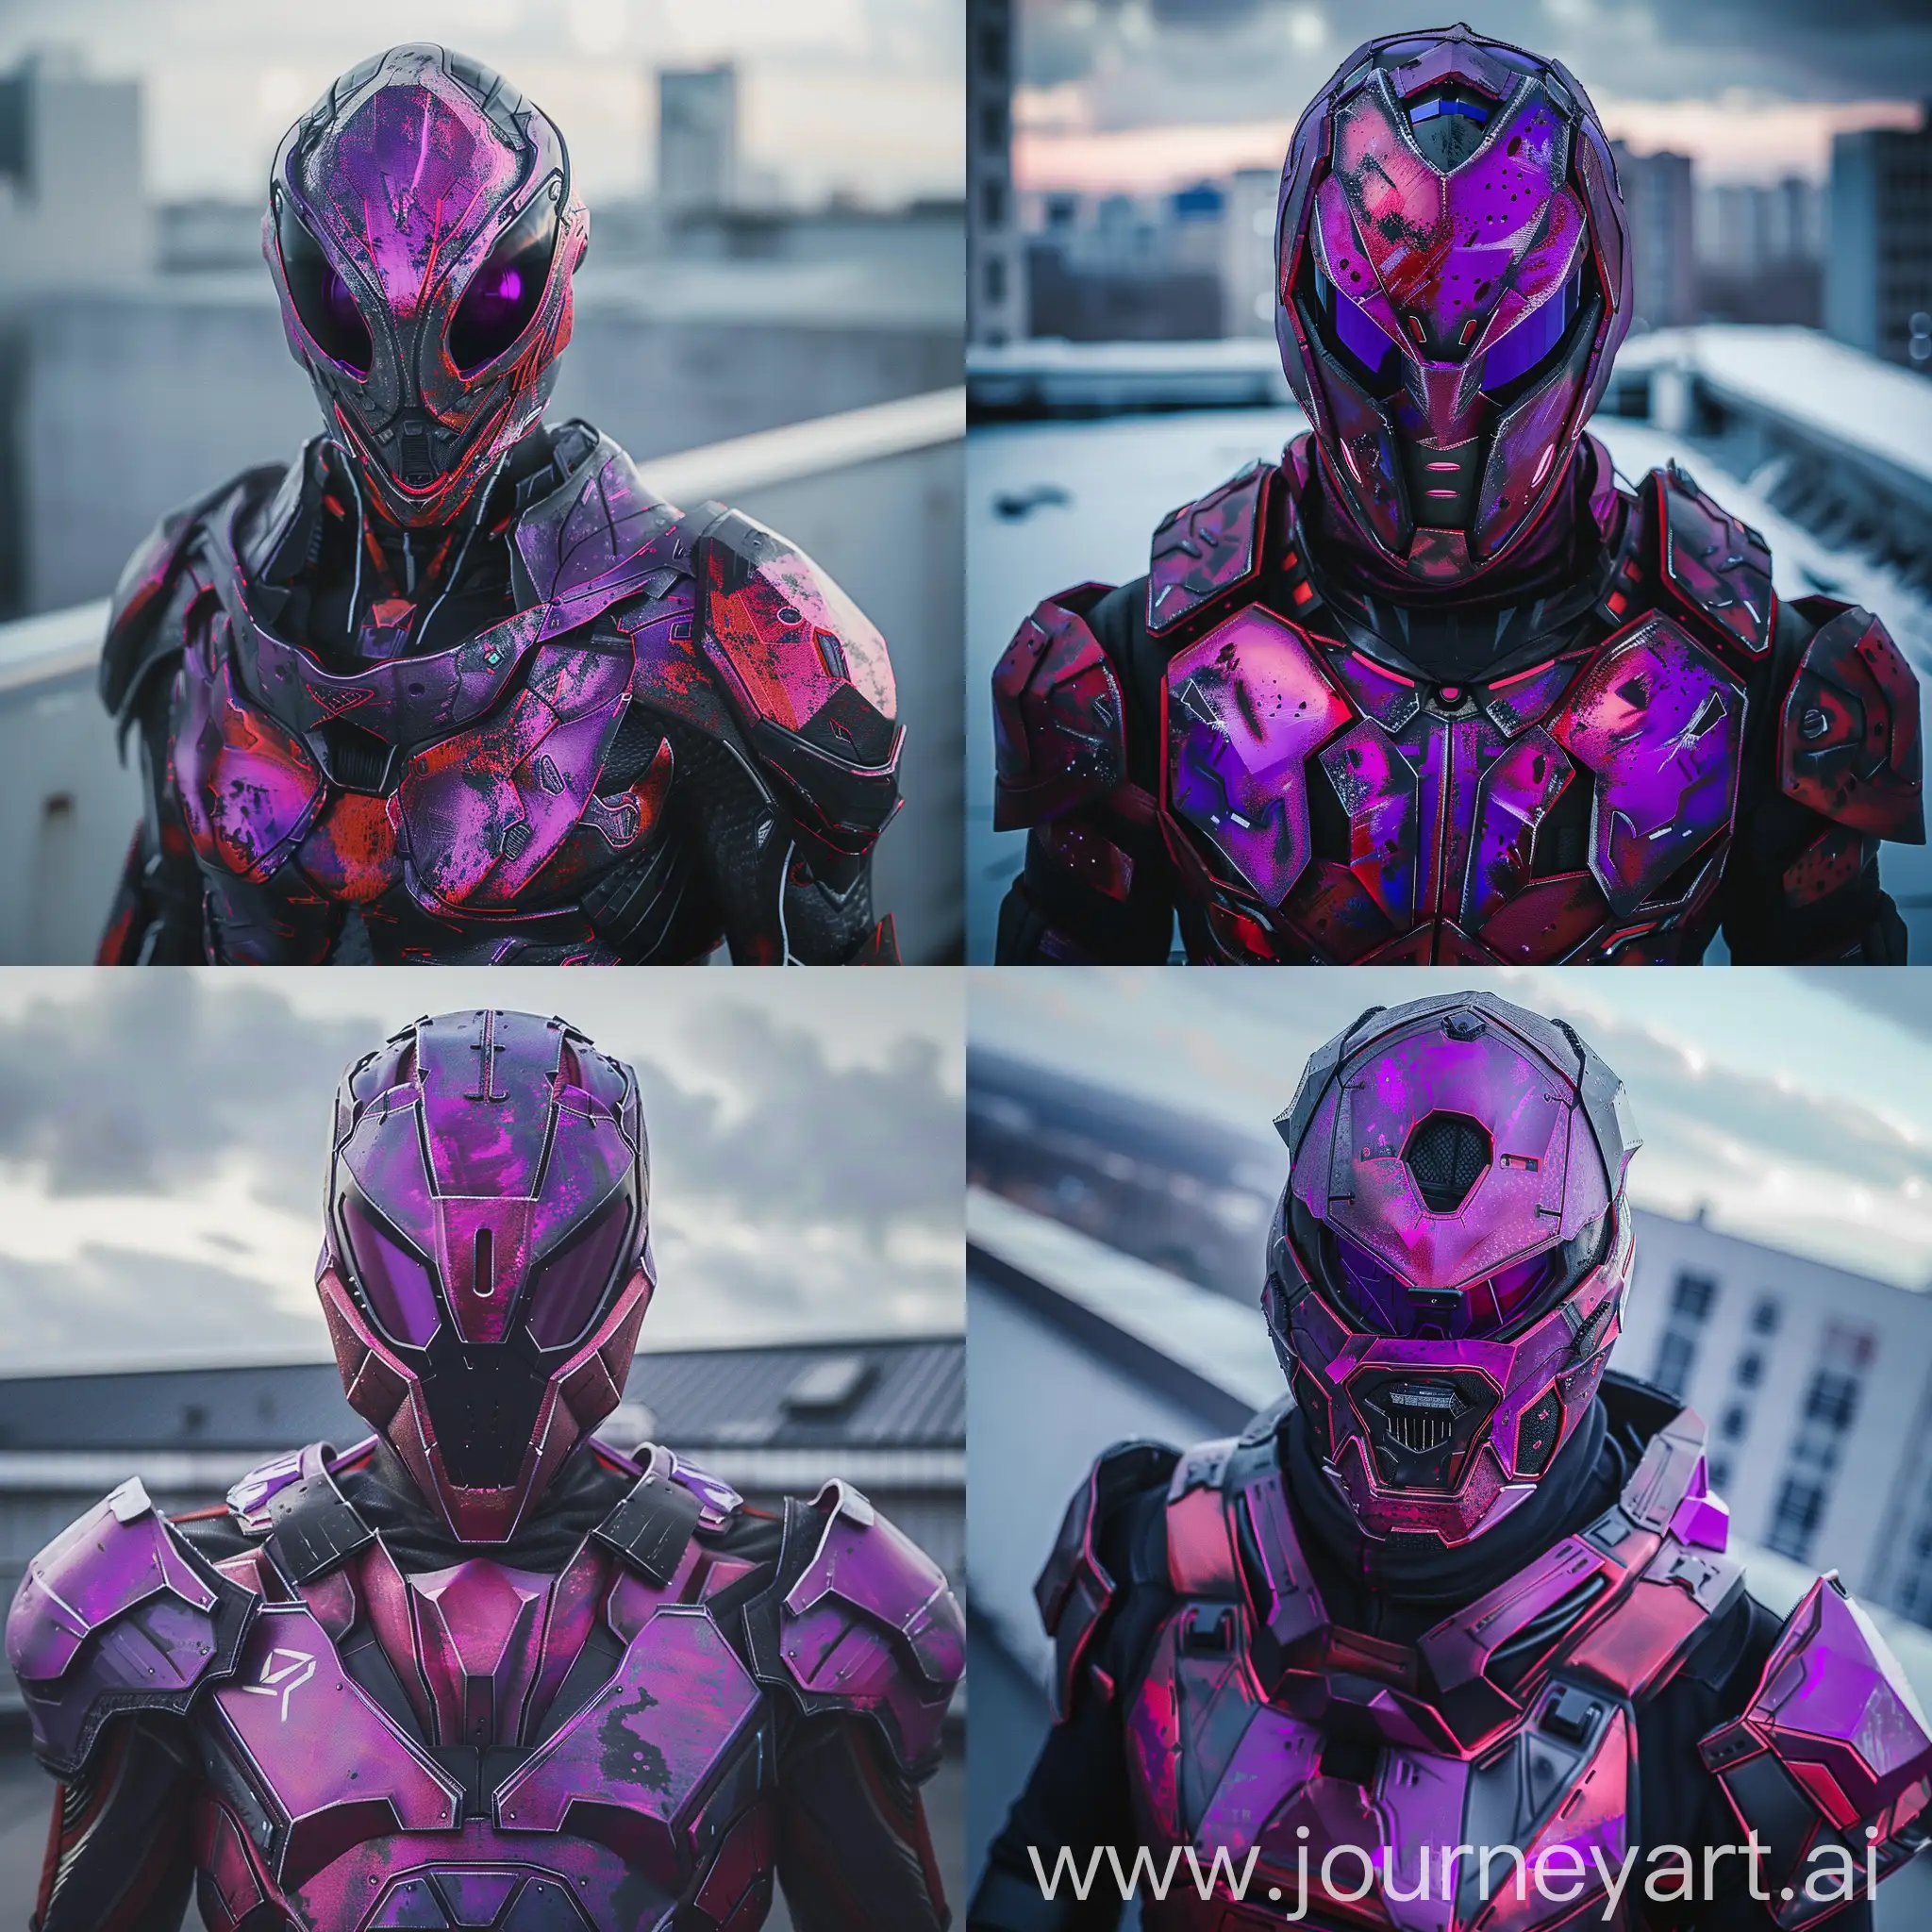 Futuristic-Superhero-in-Vibrant-Purple-and-Dark-Red-Costume-on-Rooftop